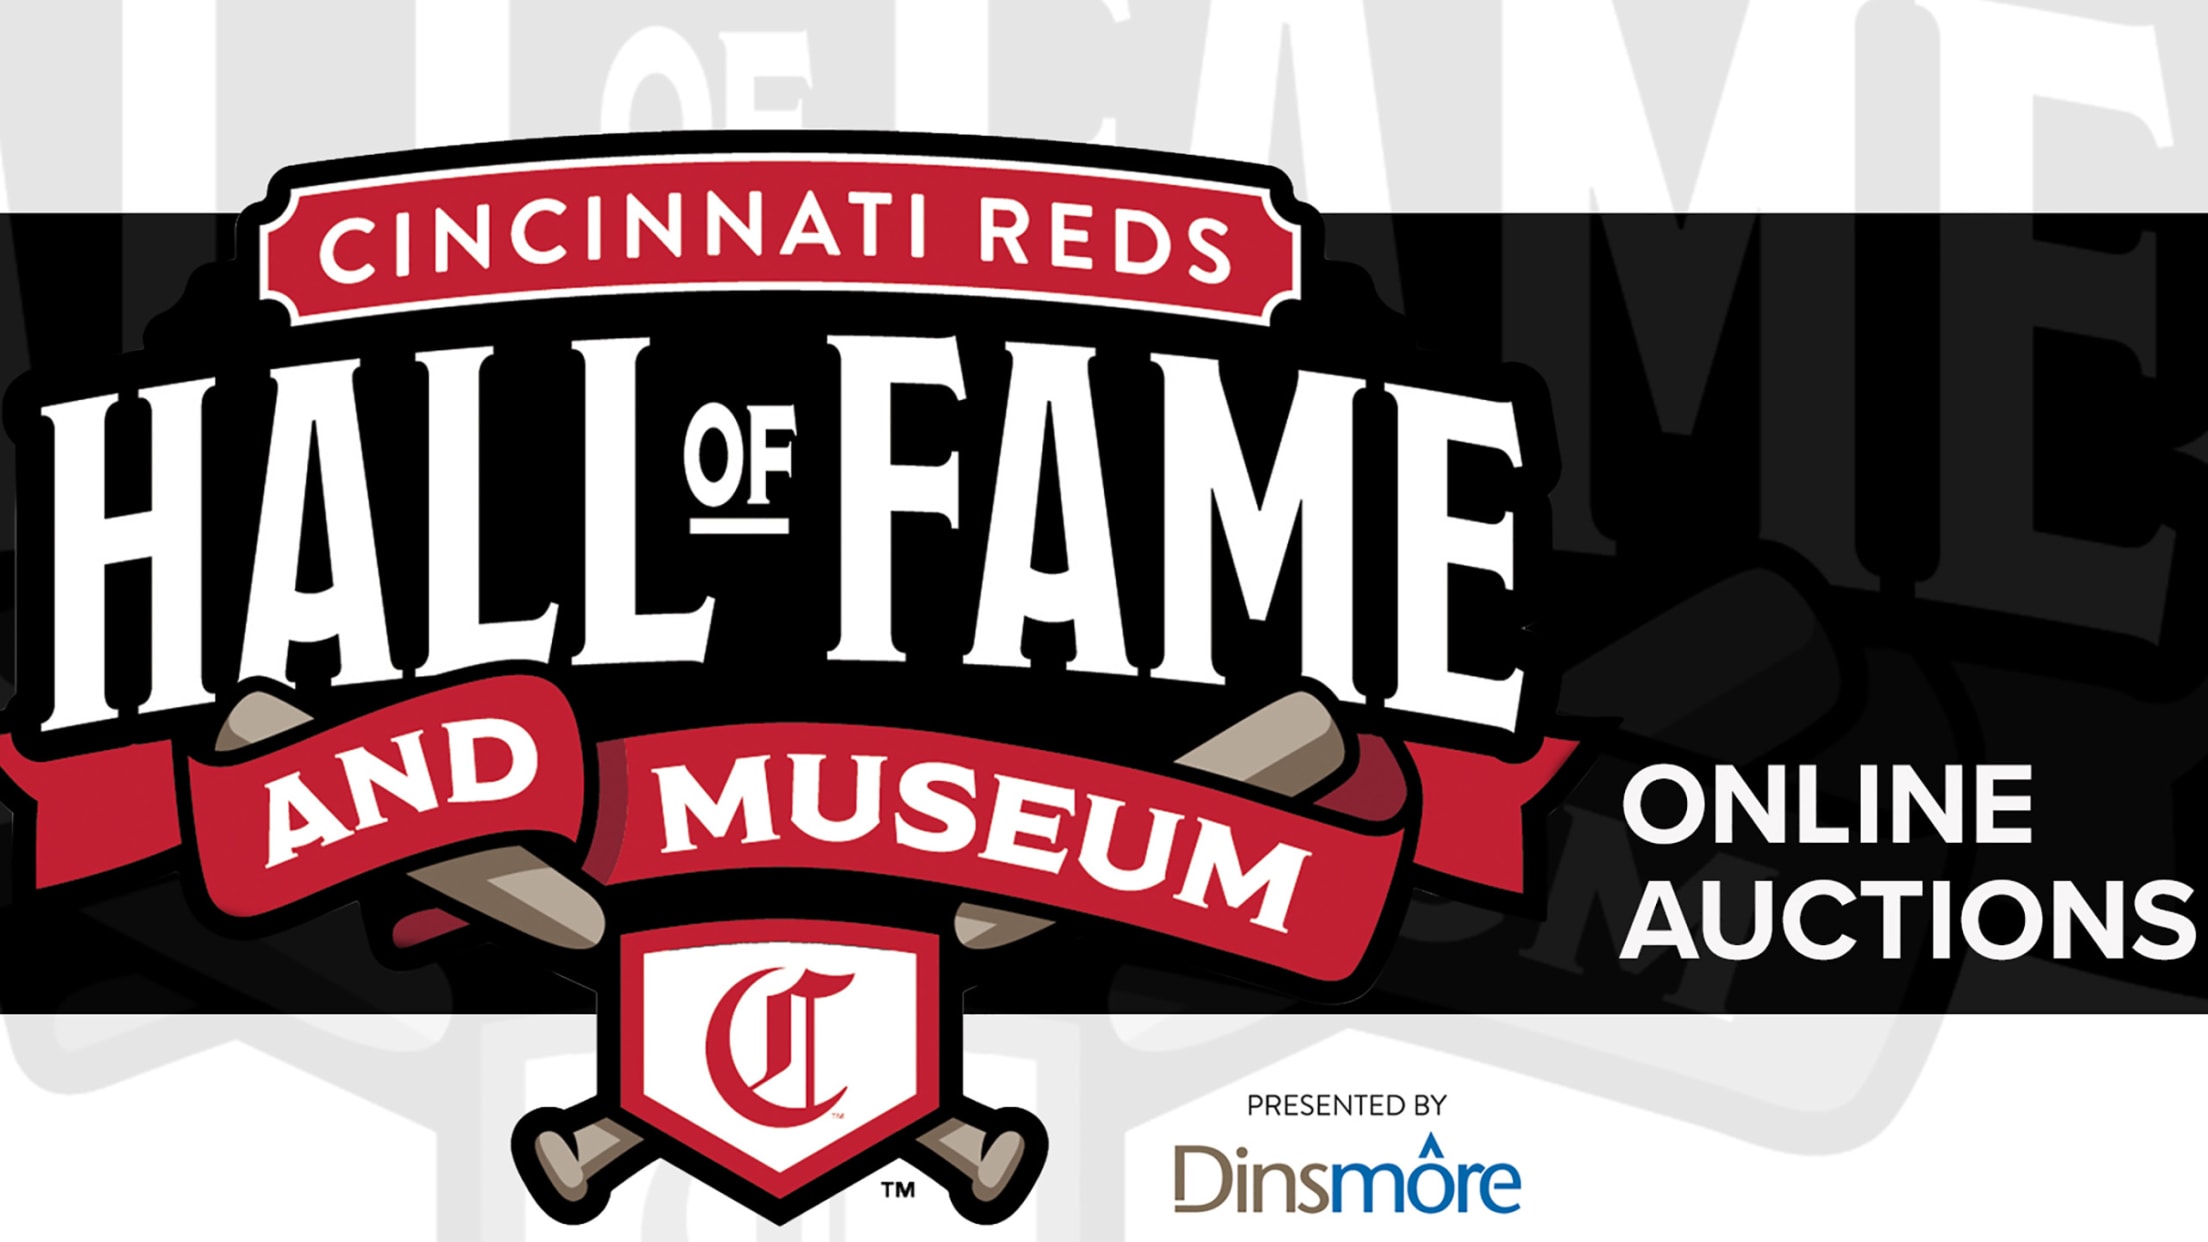 Reds Hall of Fame Weekend in Cincinnati